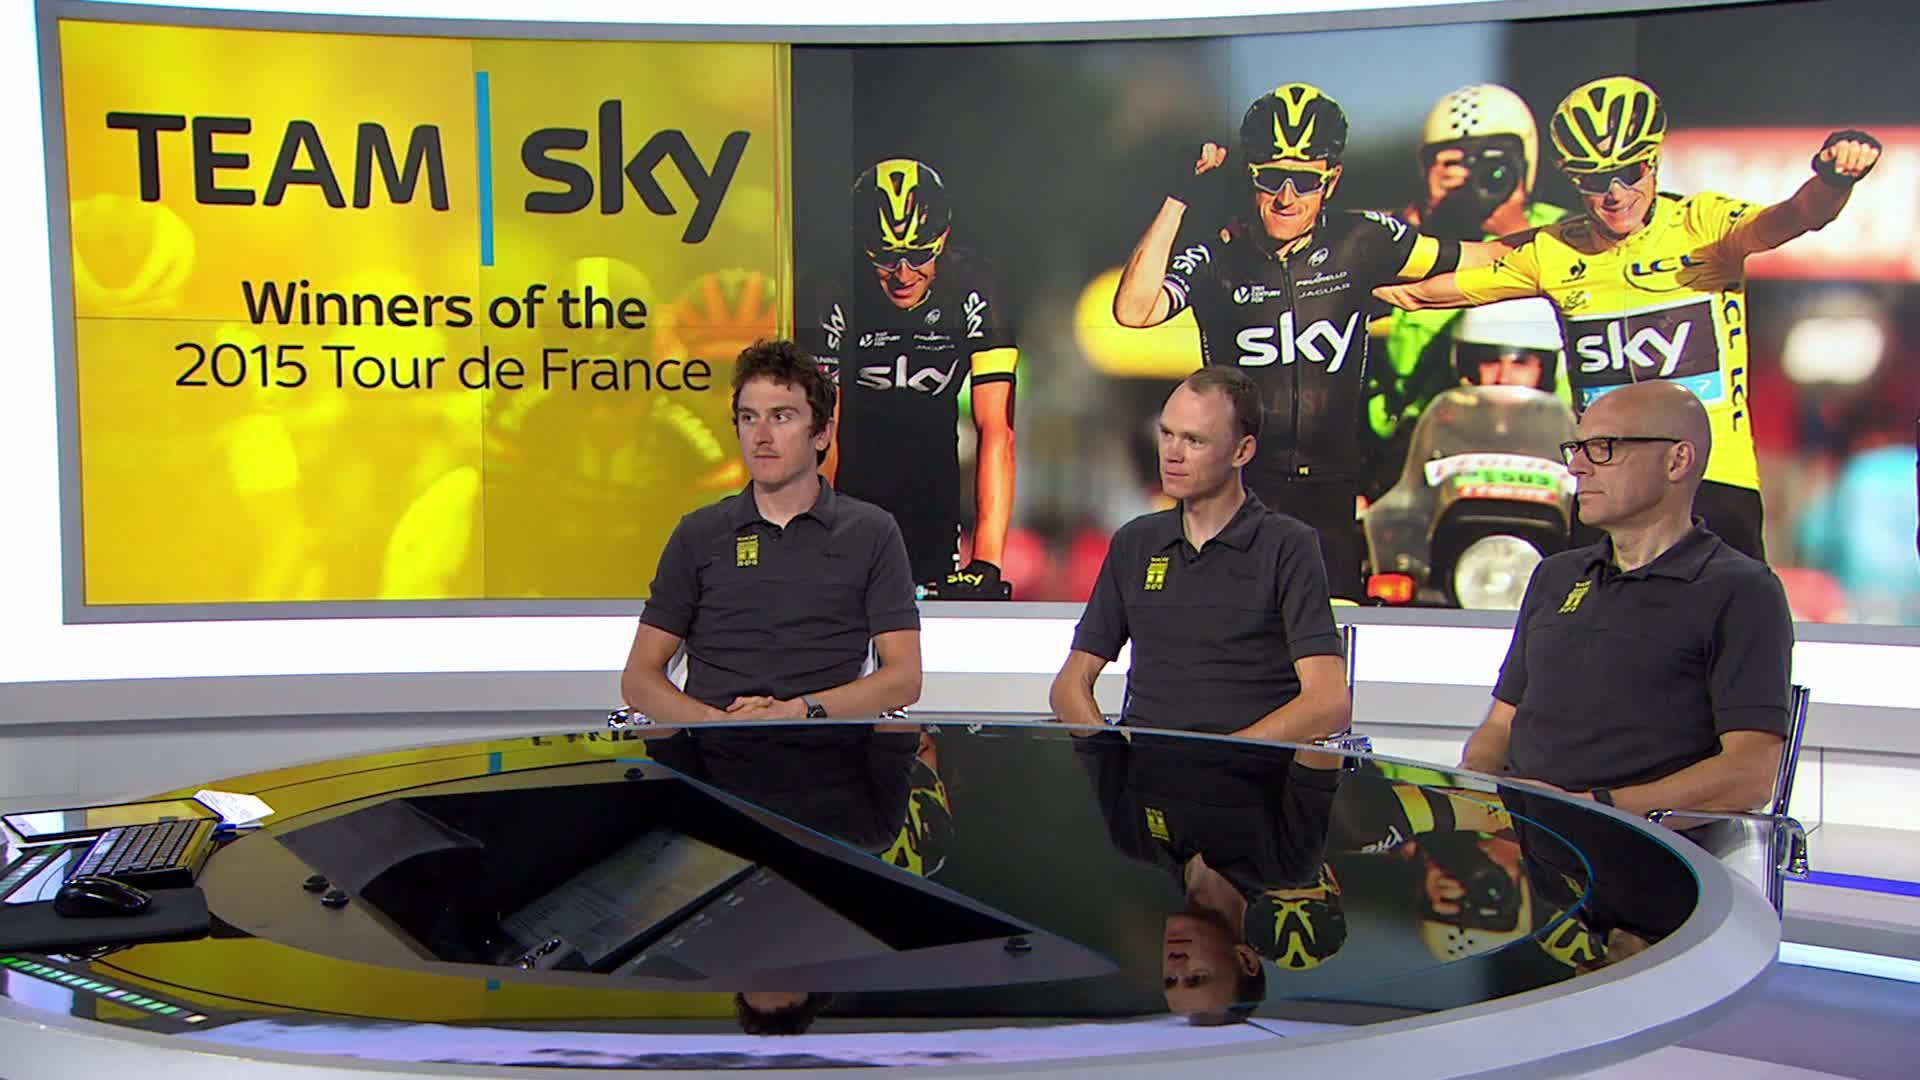 Chris Froome may race Vuelta a Espana after Tour de France win